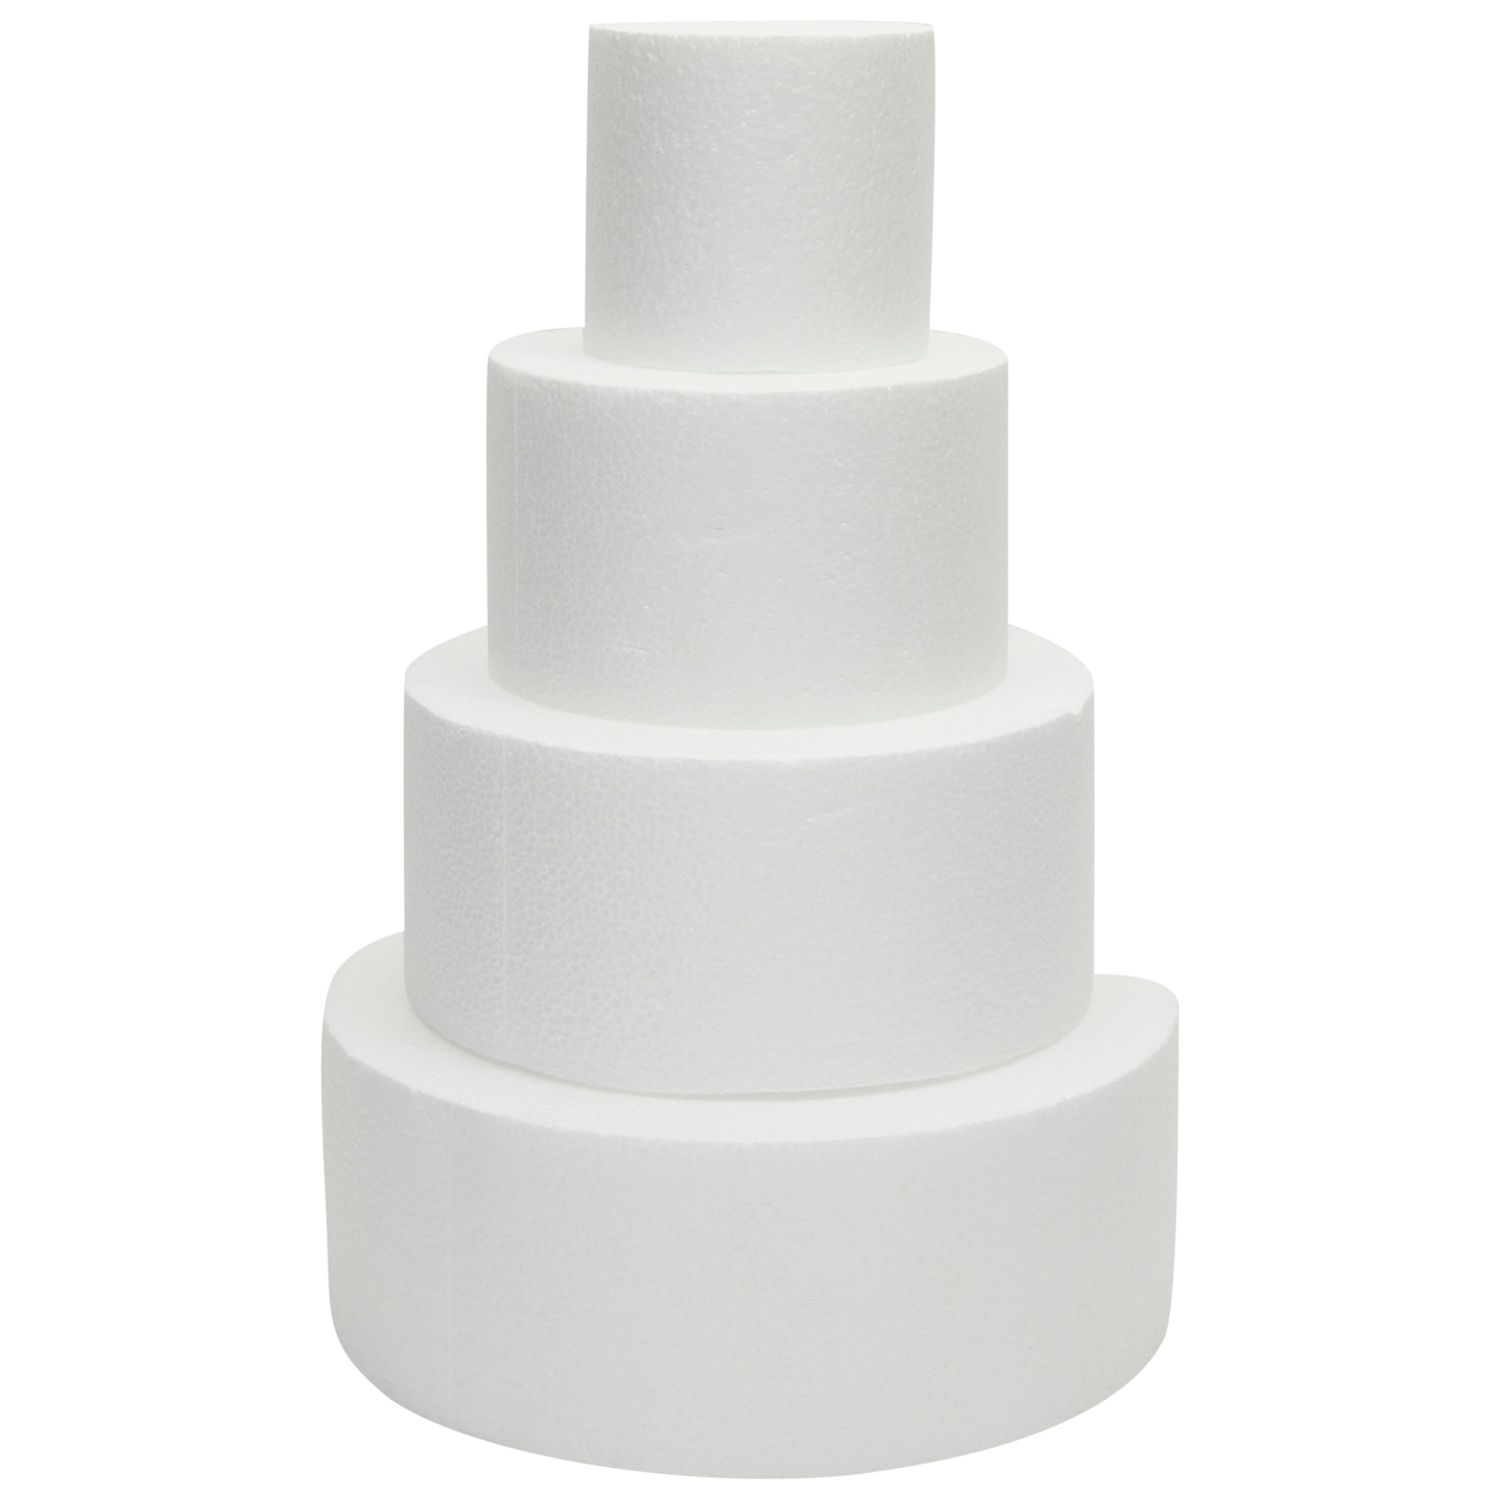 Styrofoam Cake Forms, Fake Bake Cake Molds, Craft Styrofoam 